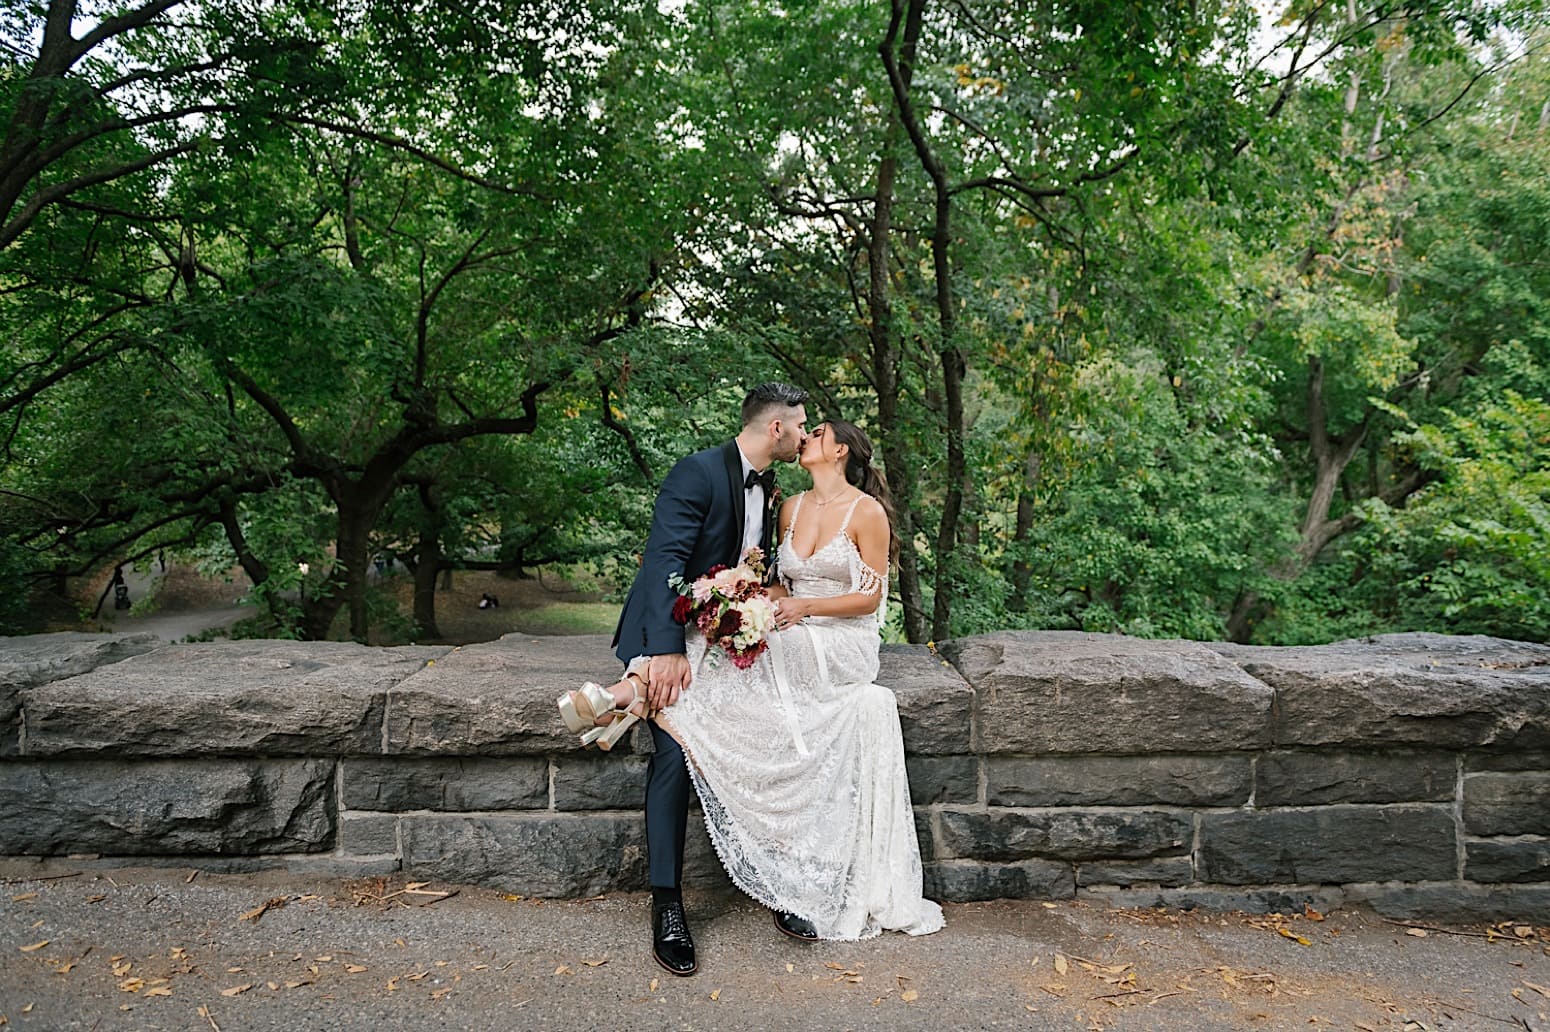 A Treehouse for Dreaming wedding in Central Park NYC (aka Dene Summerhouse wedding)